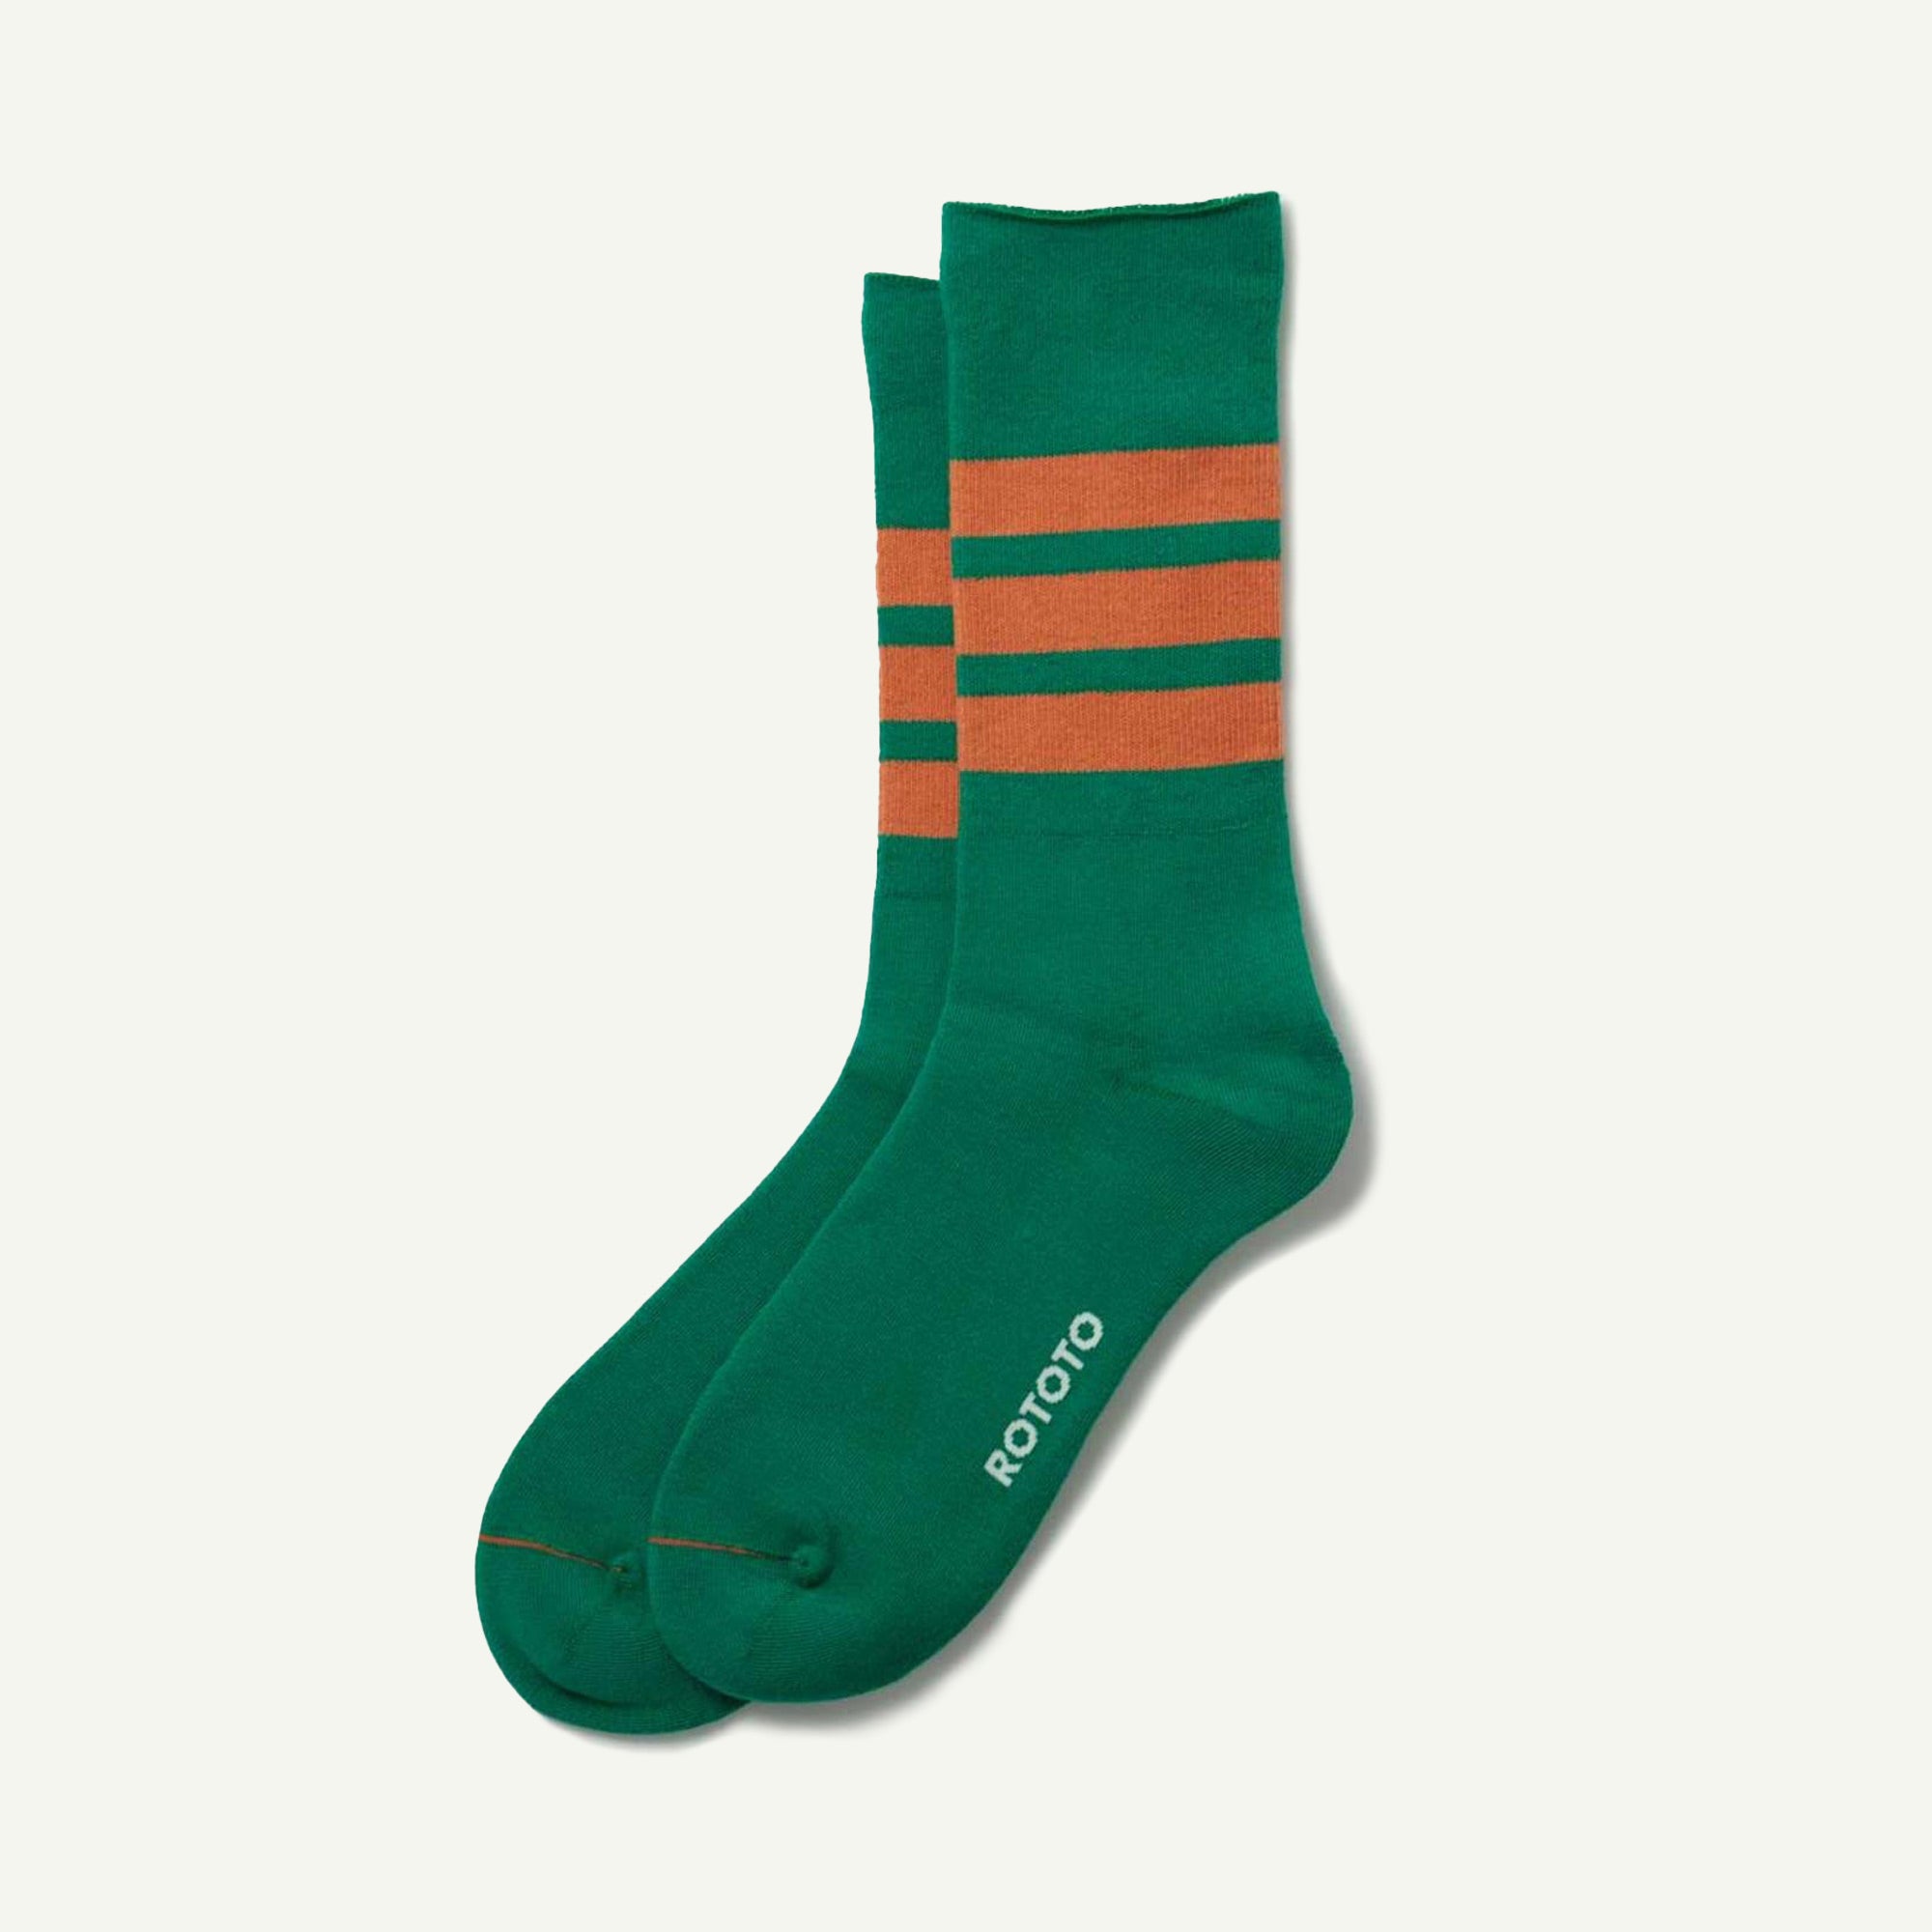 Rototo Green/Orange Striped Socks